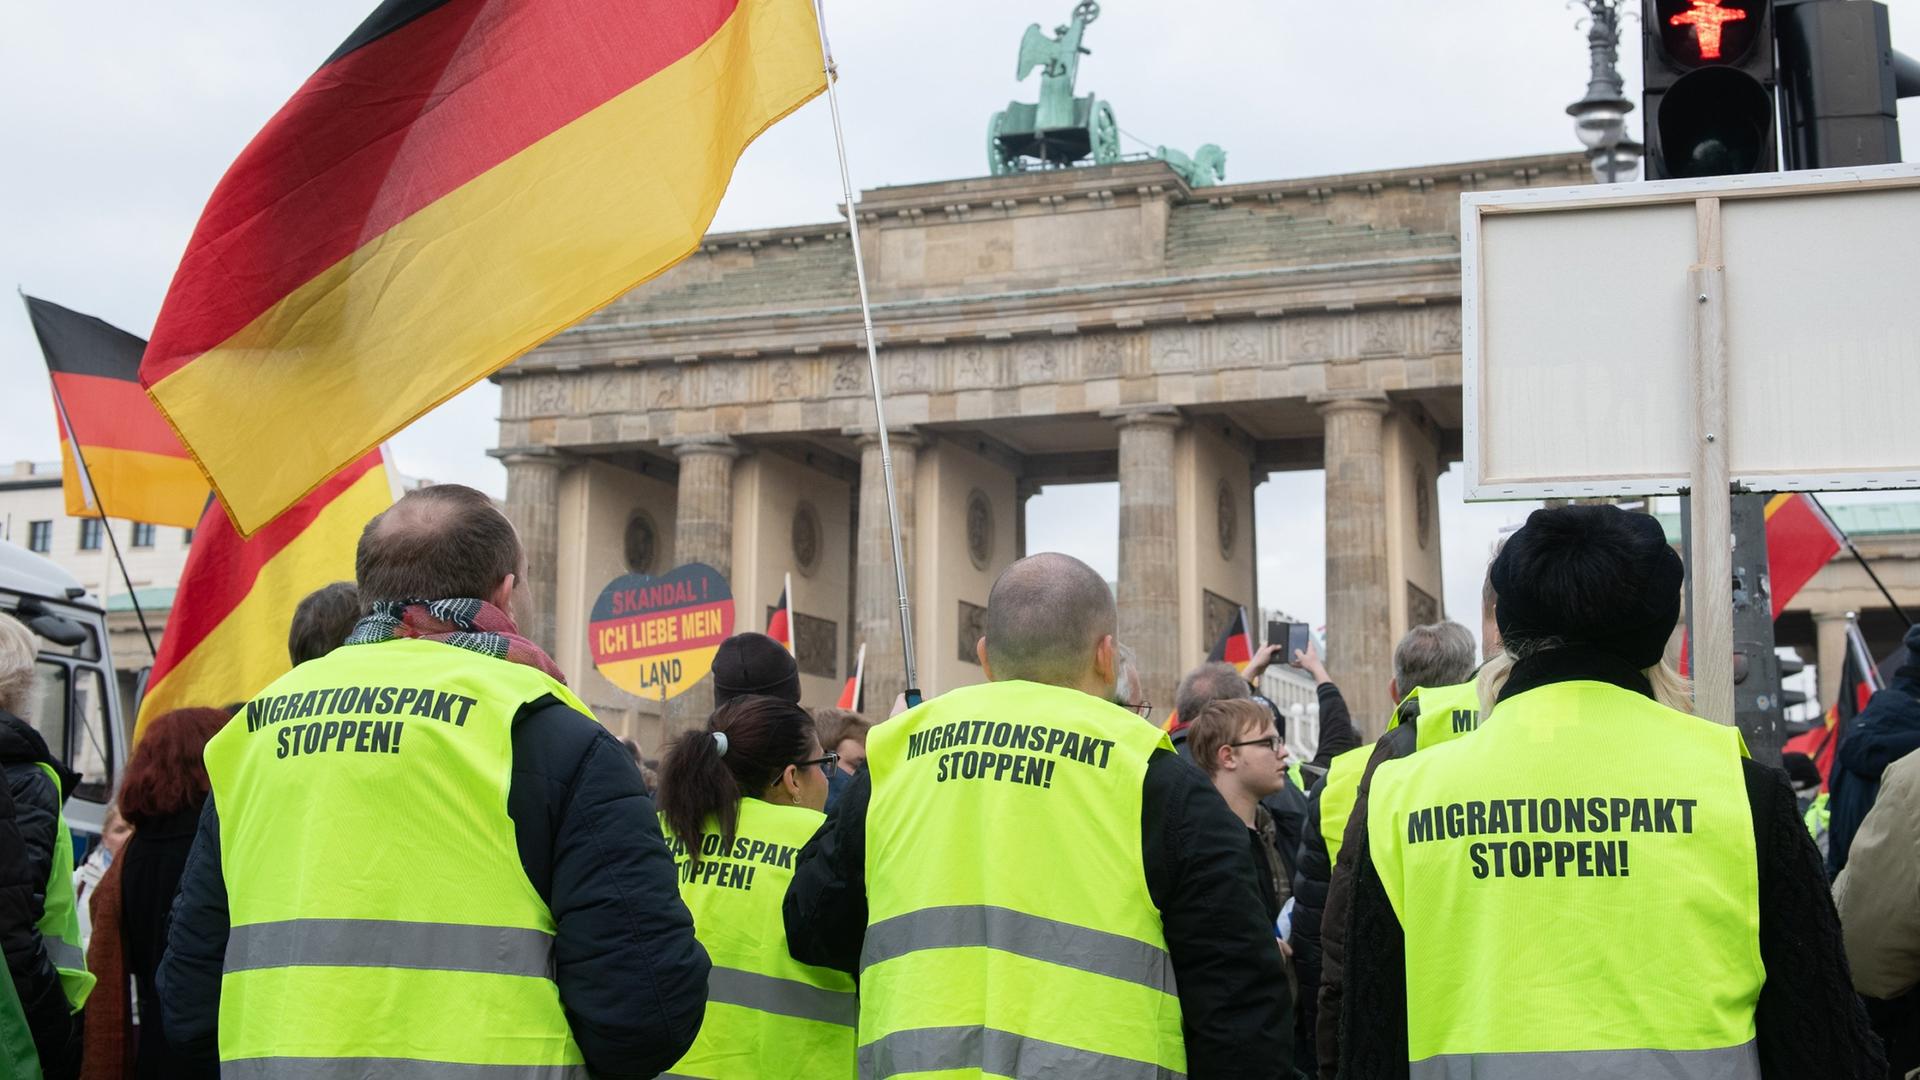 Demonstranten vor dem Brandenburger Tor.